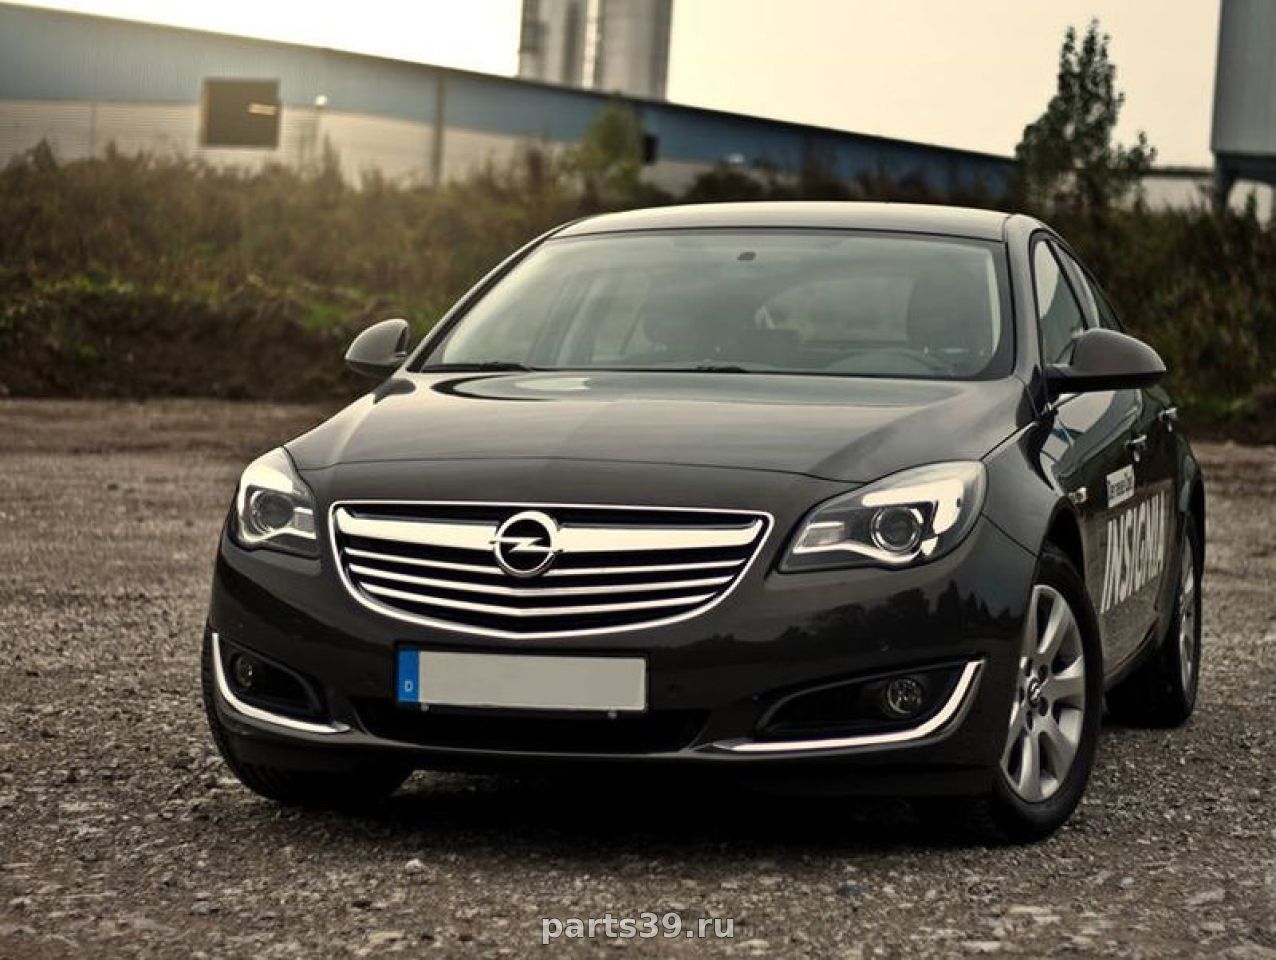 Опель инсигния б. Opel Insignia 2015. Opel Insignia 2.0. Опель Инсигния 1. Опель Инсигния 2015.